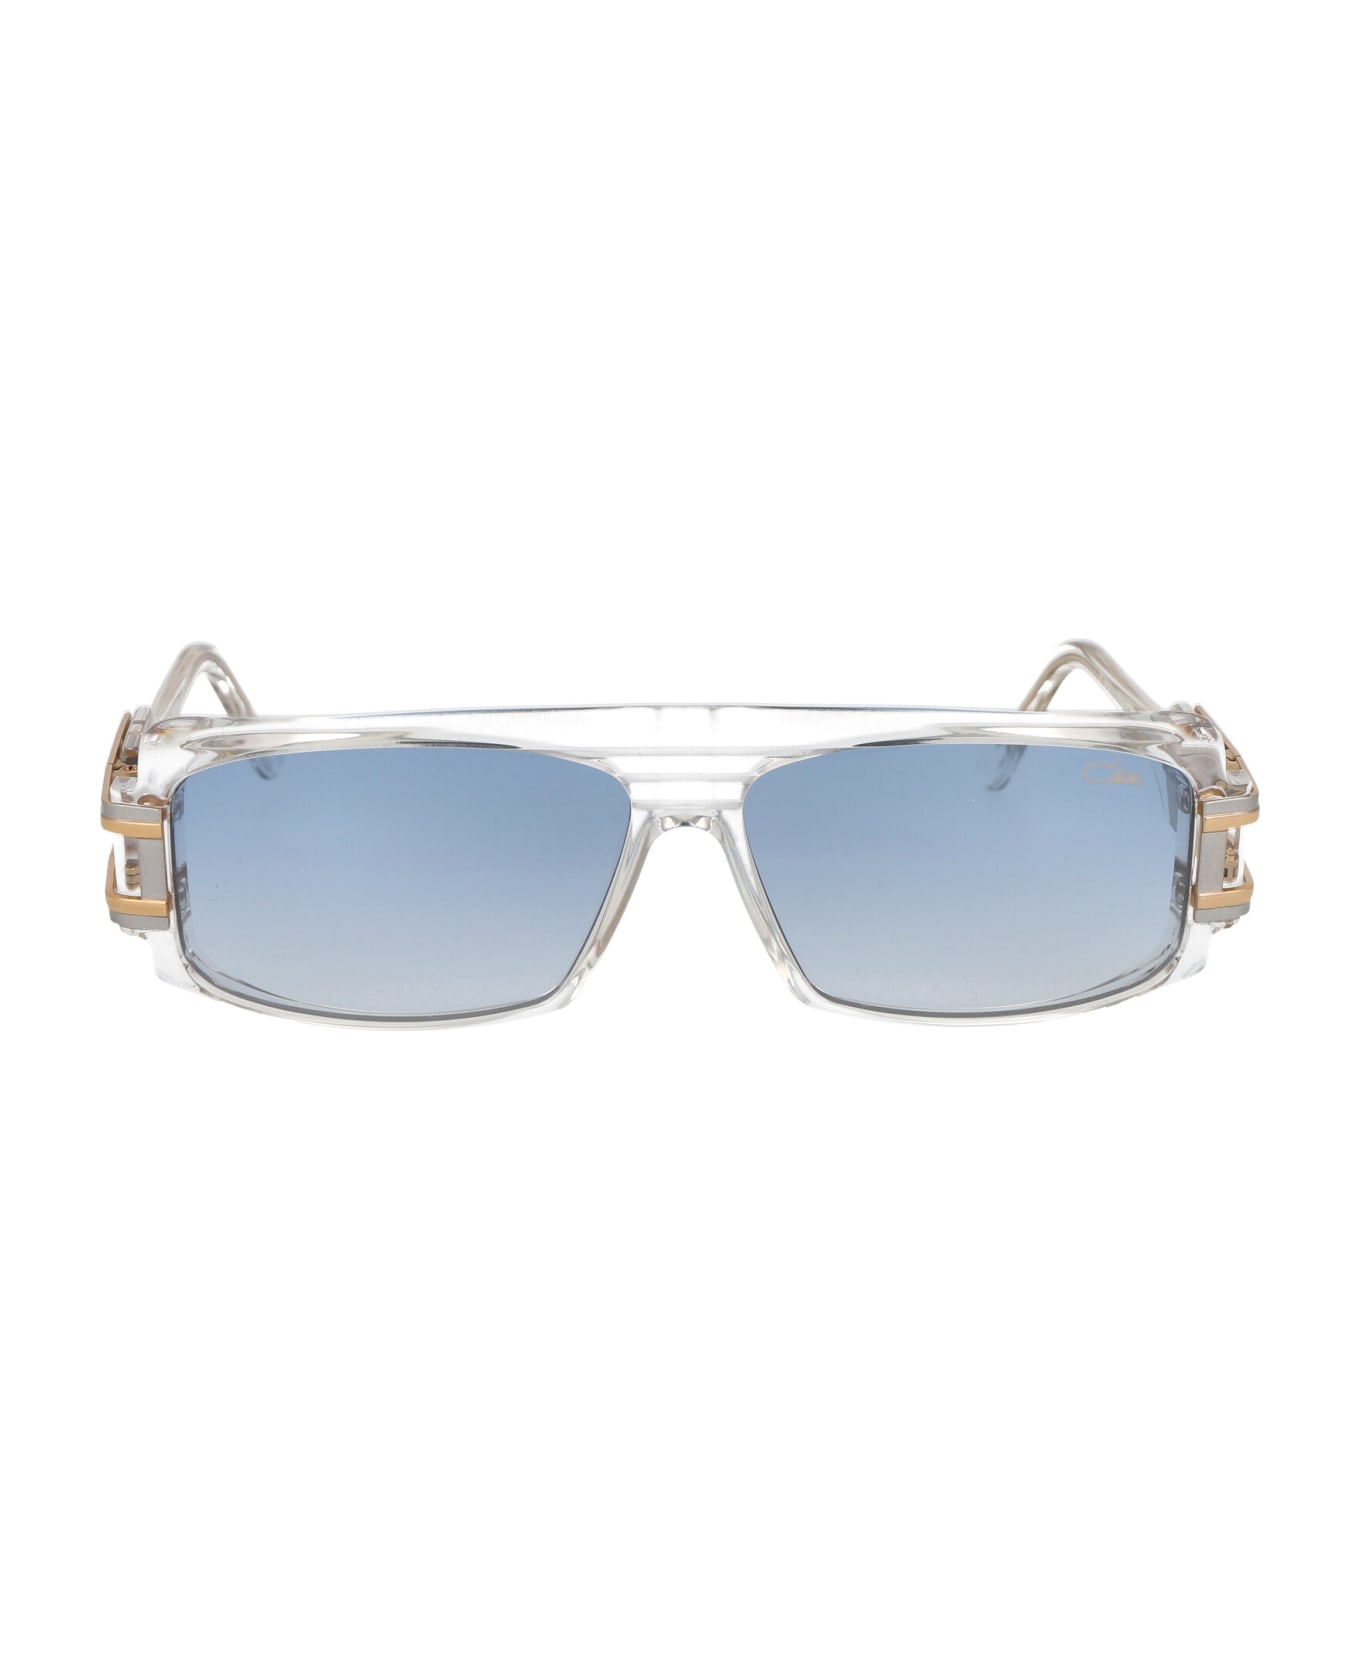 Cazal Mod. 164/3 Sunglasses - 002 CRYSTAL サングラス